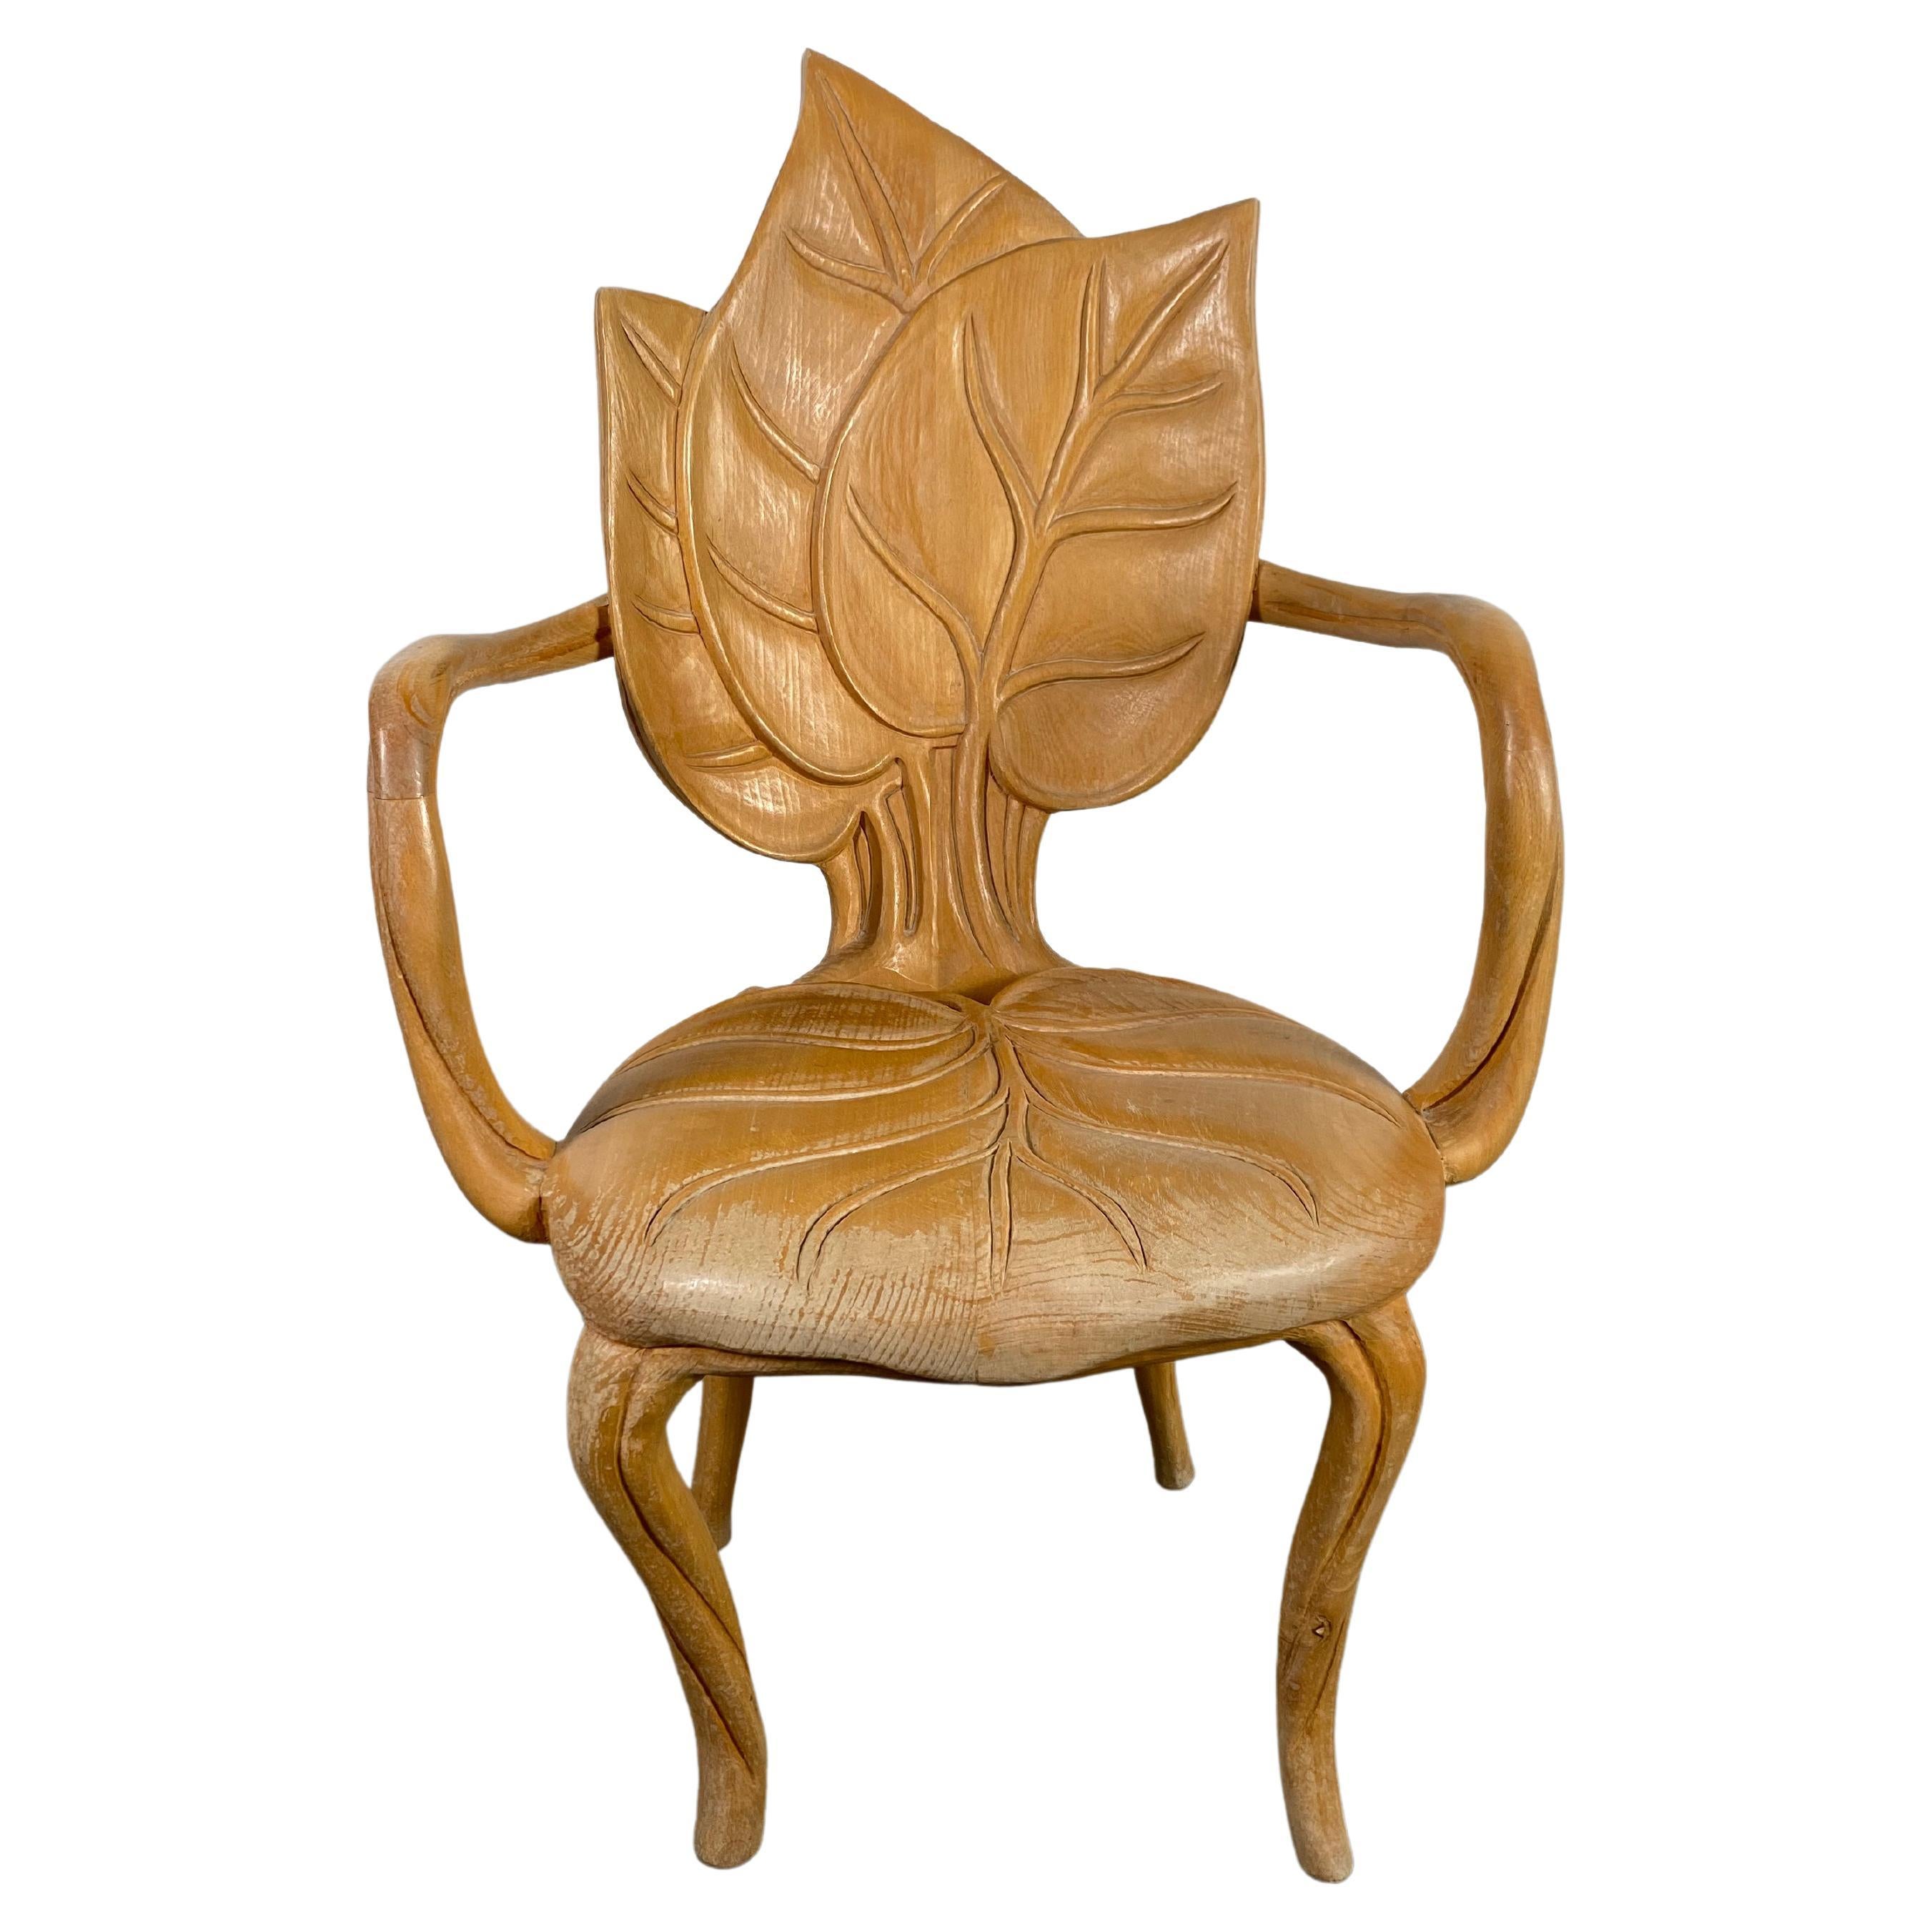 Bartolozzi & Maioli Carved Wooden Leaf Armchair